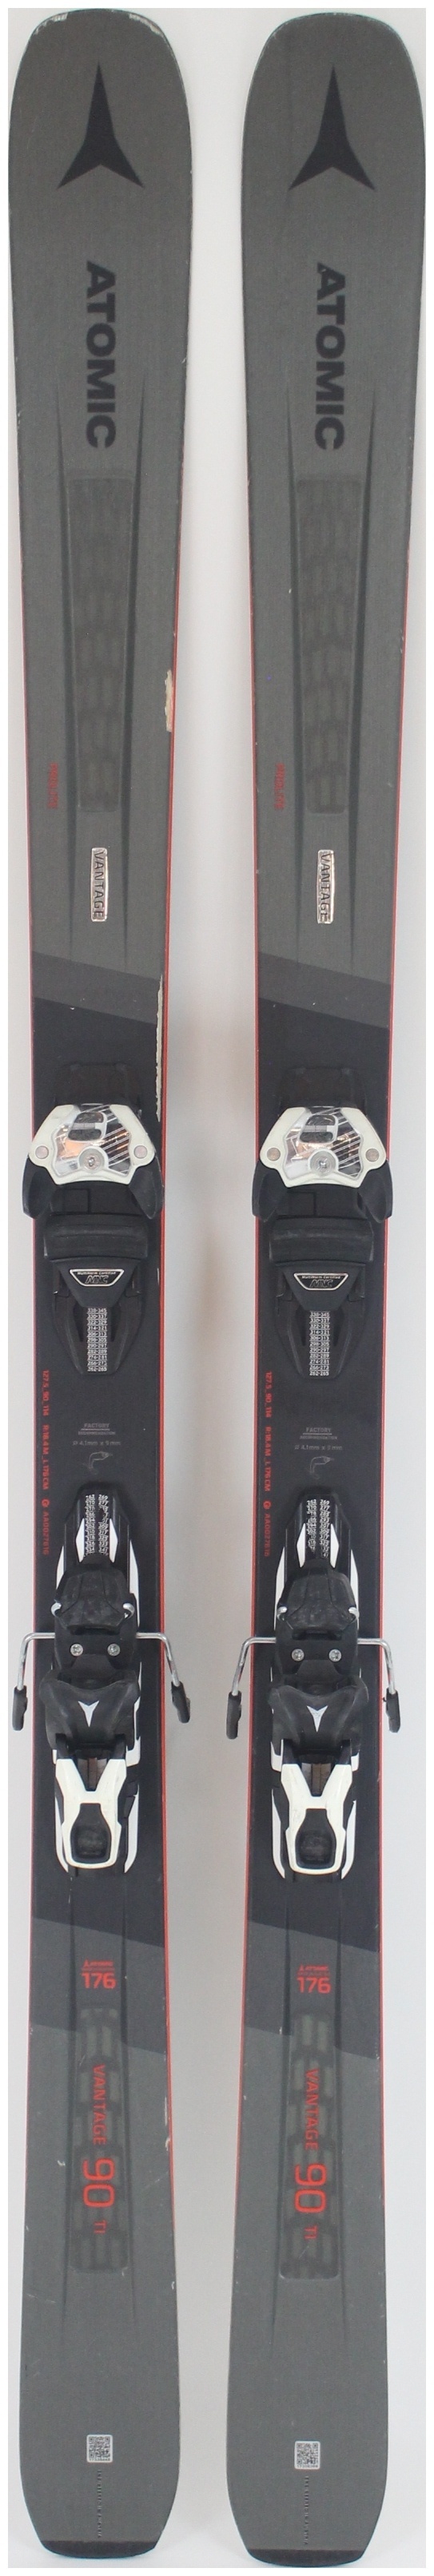 2020, Atomic, Vantage 90 Ti Skis with Atomic Warden MNC 11 Demo Bindings  Used Demo Skis 176cm